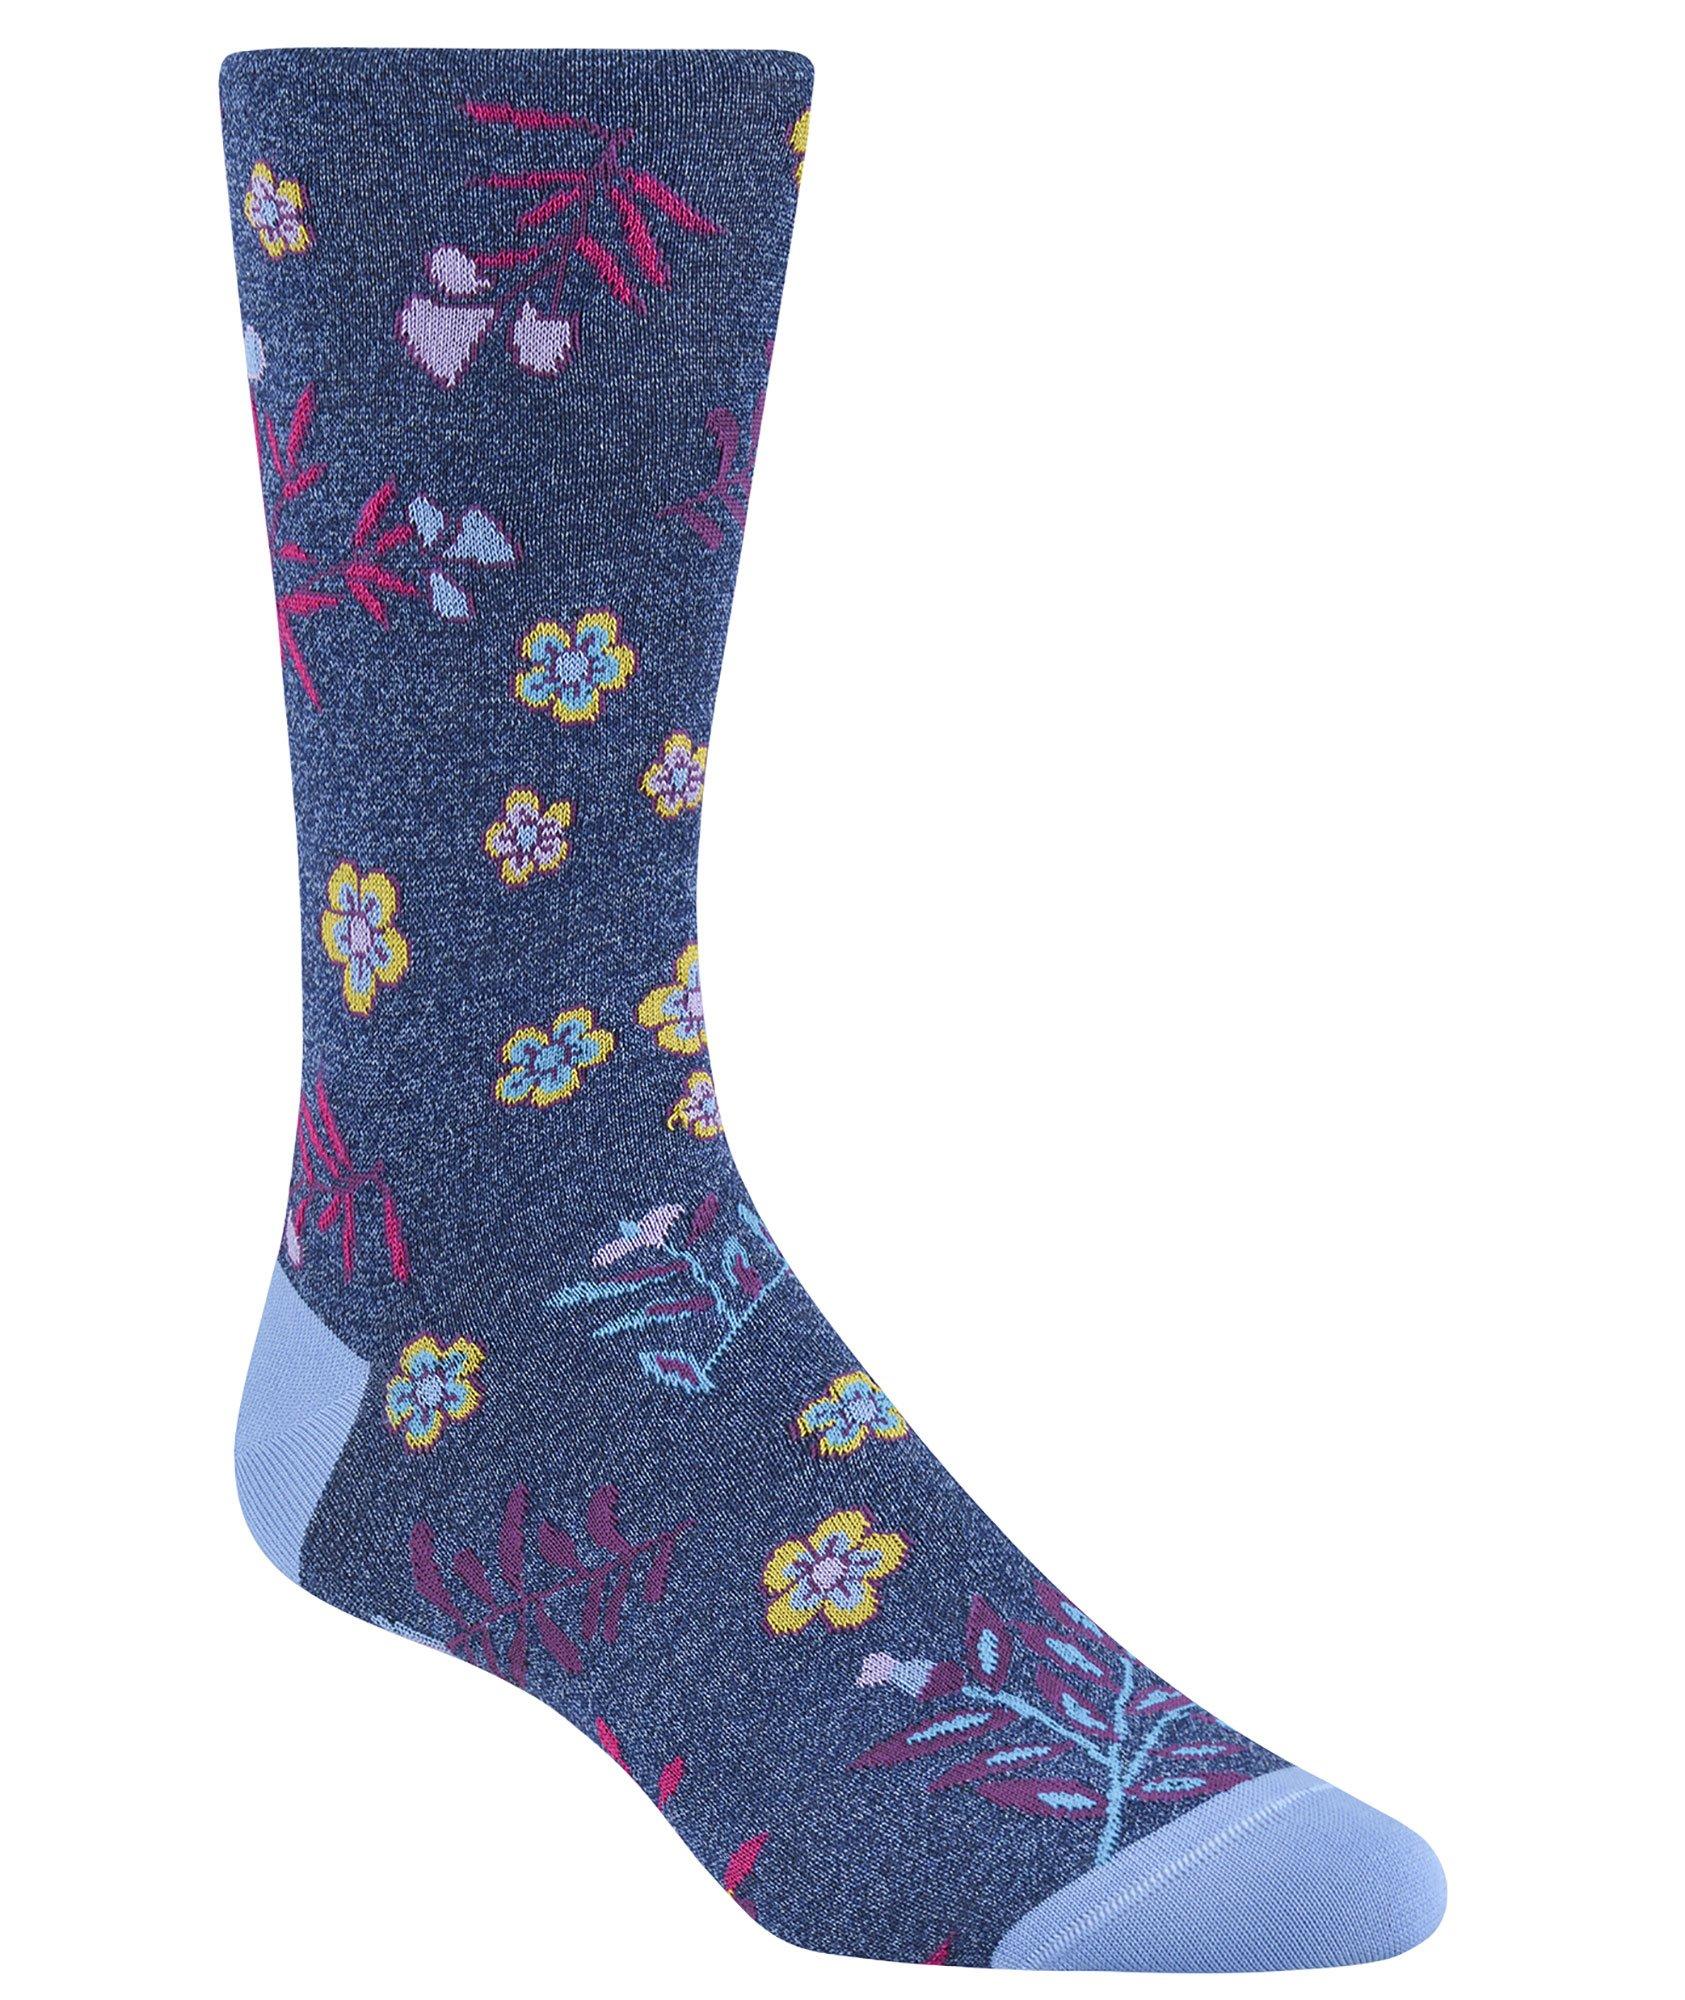 Printed Mercerized Cotton Socks image 0